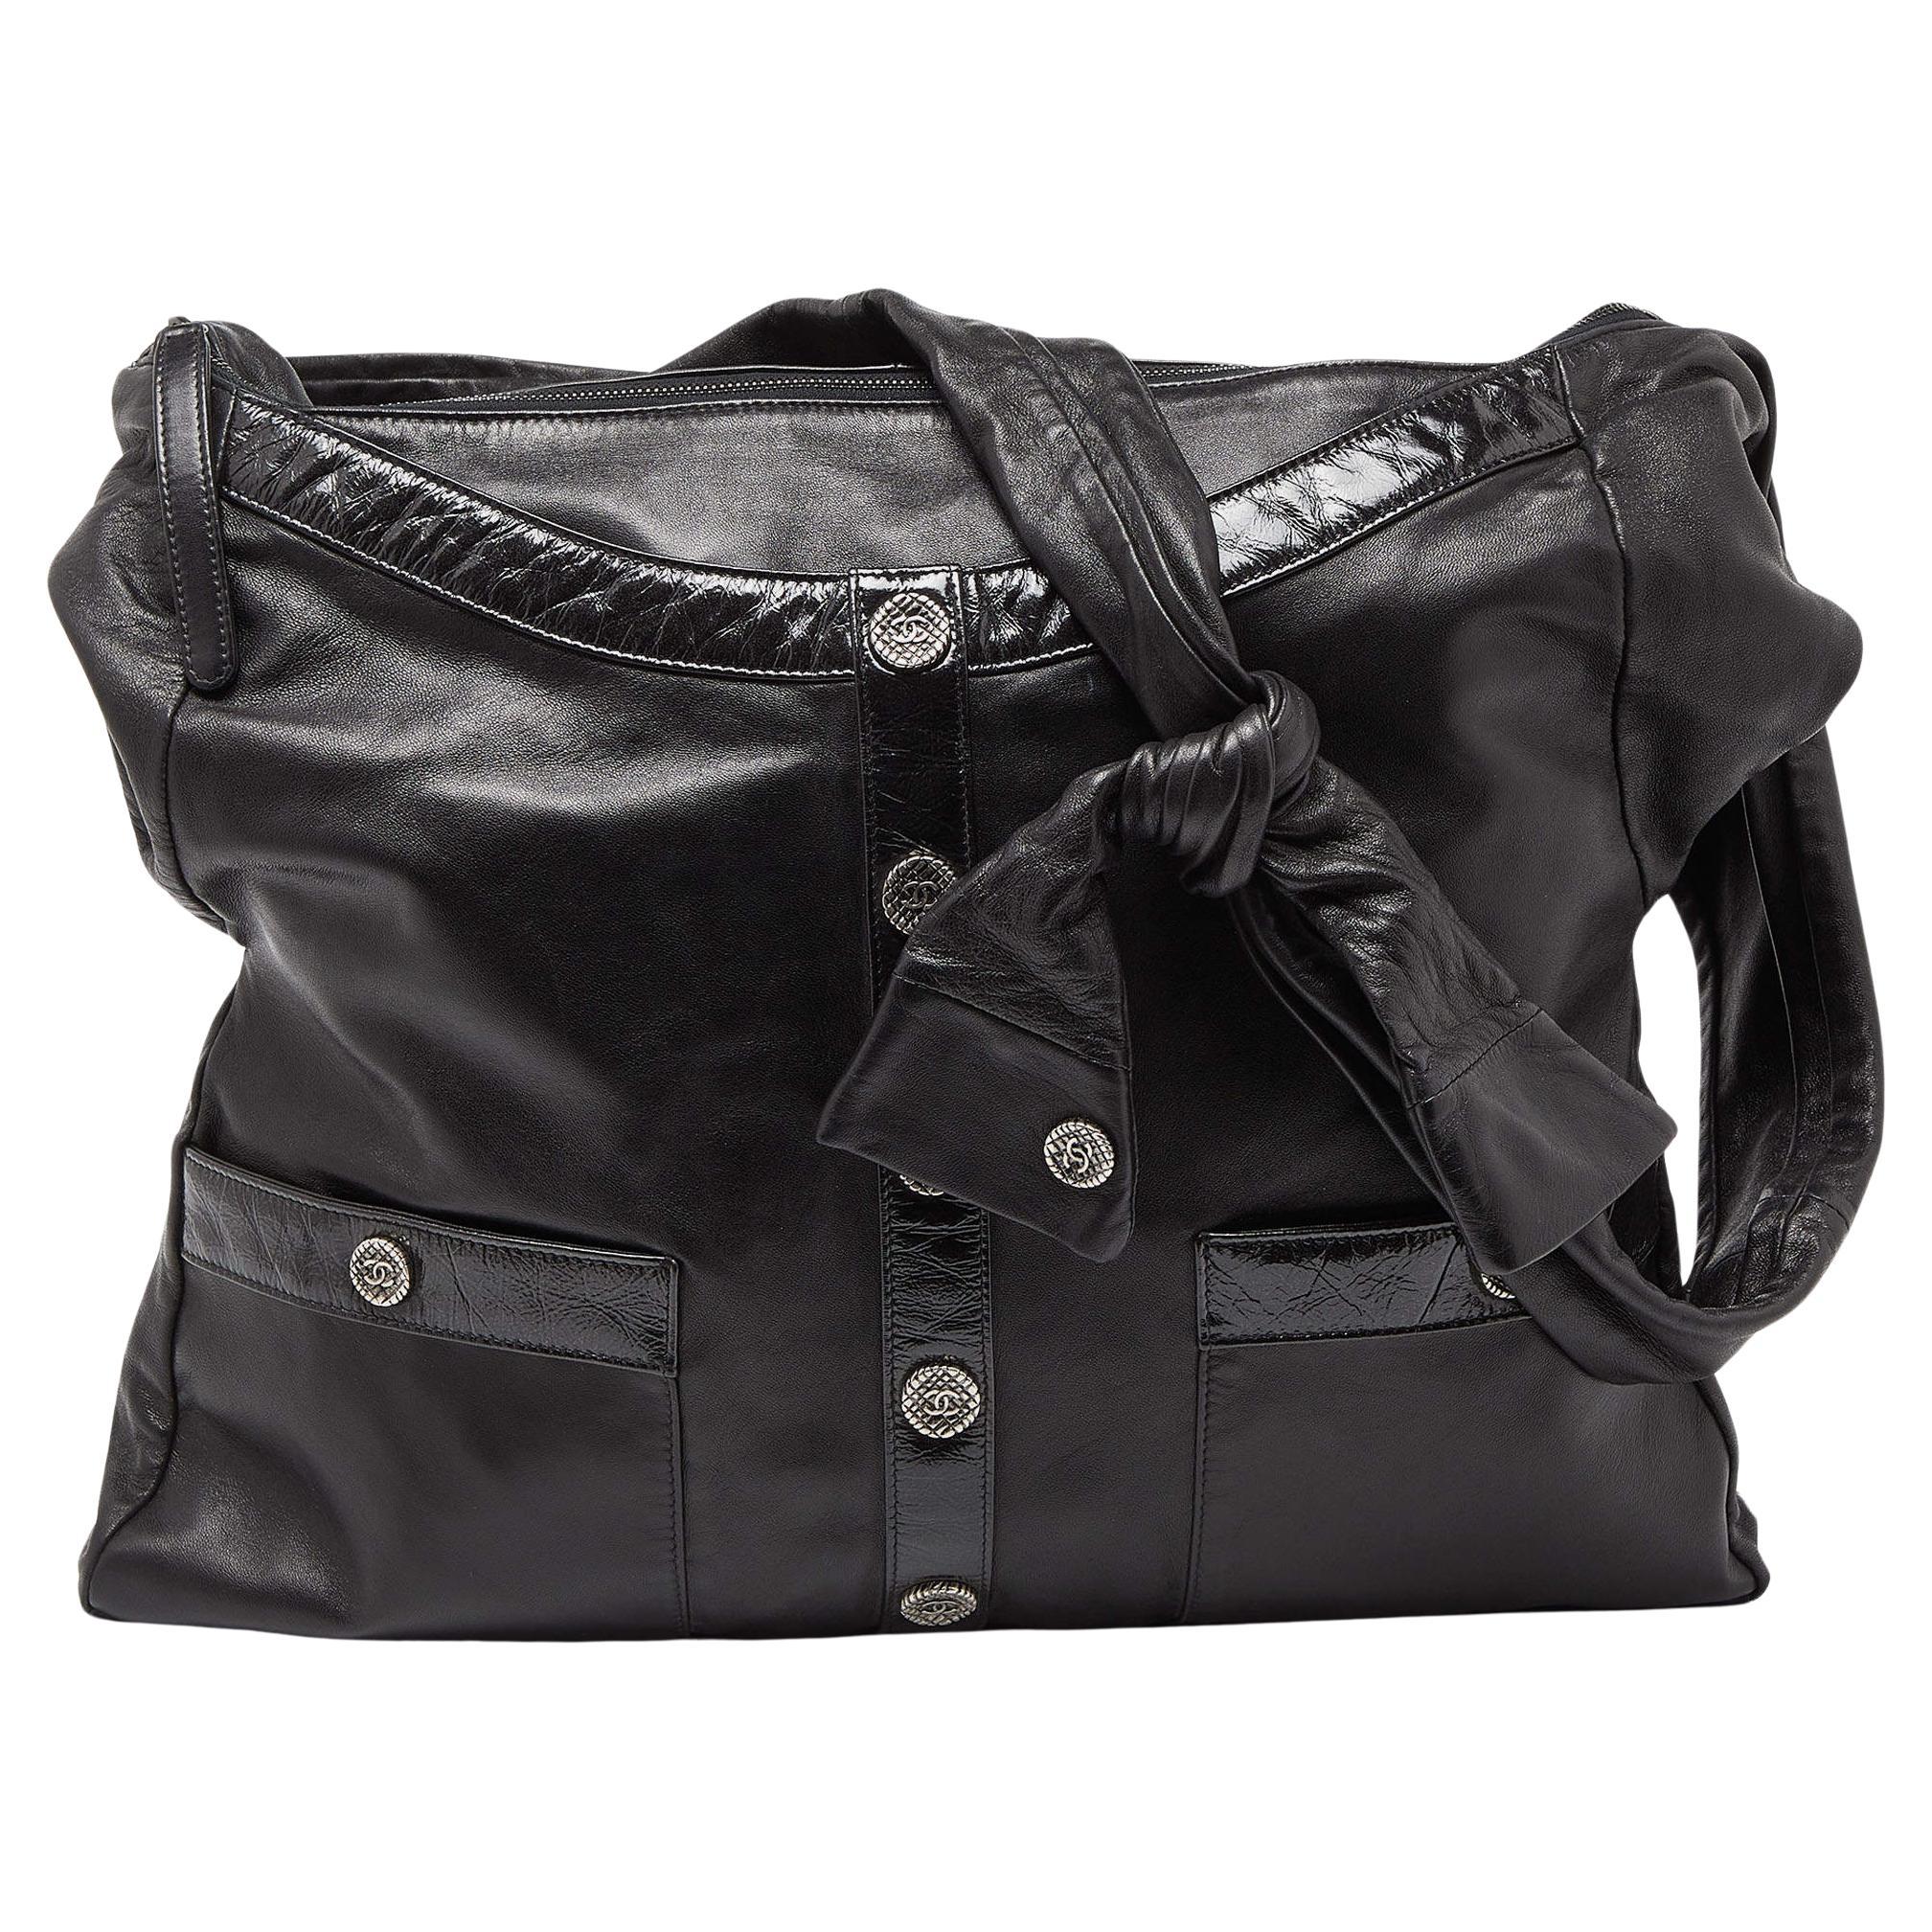 Chanel Black Leather Large Girl Chanel Bag For Sale